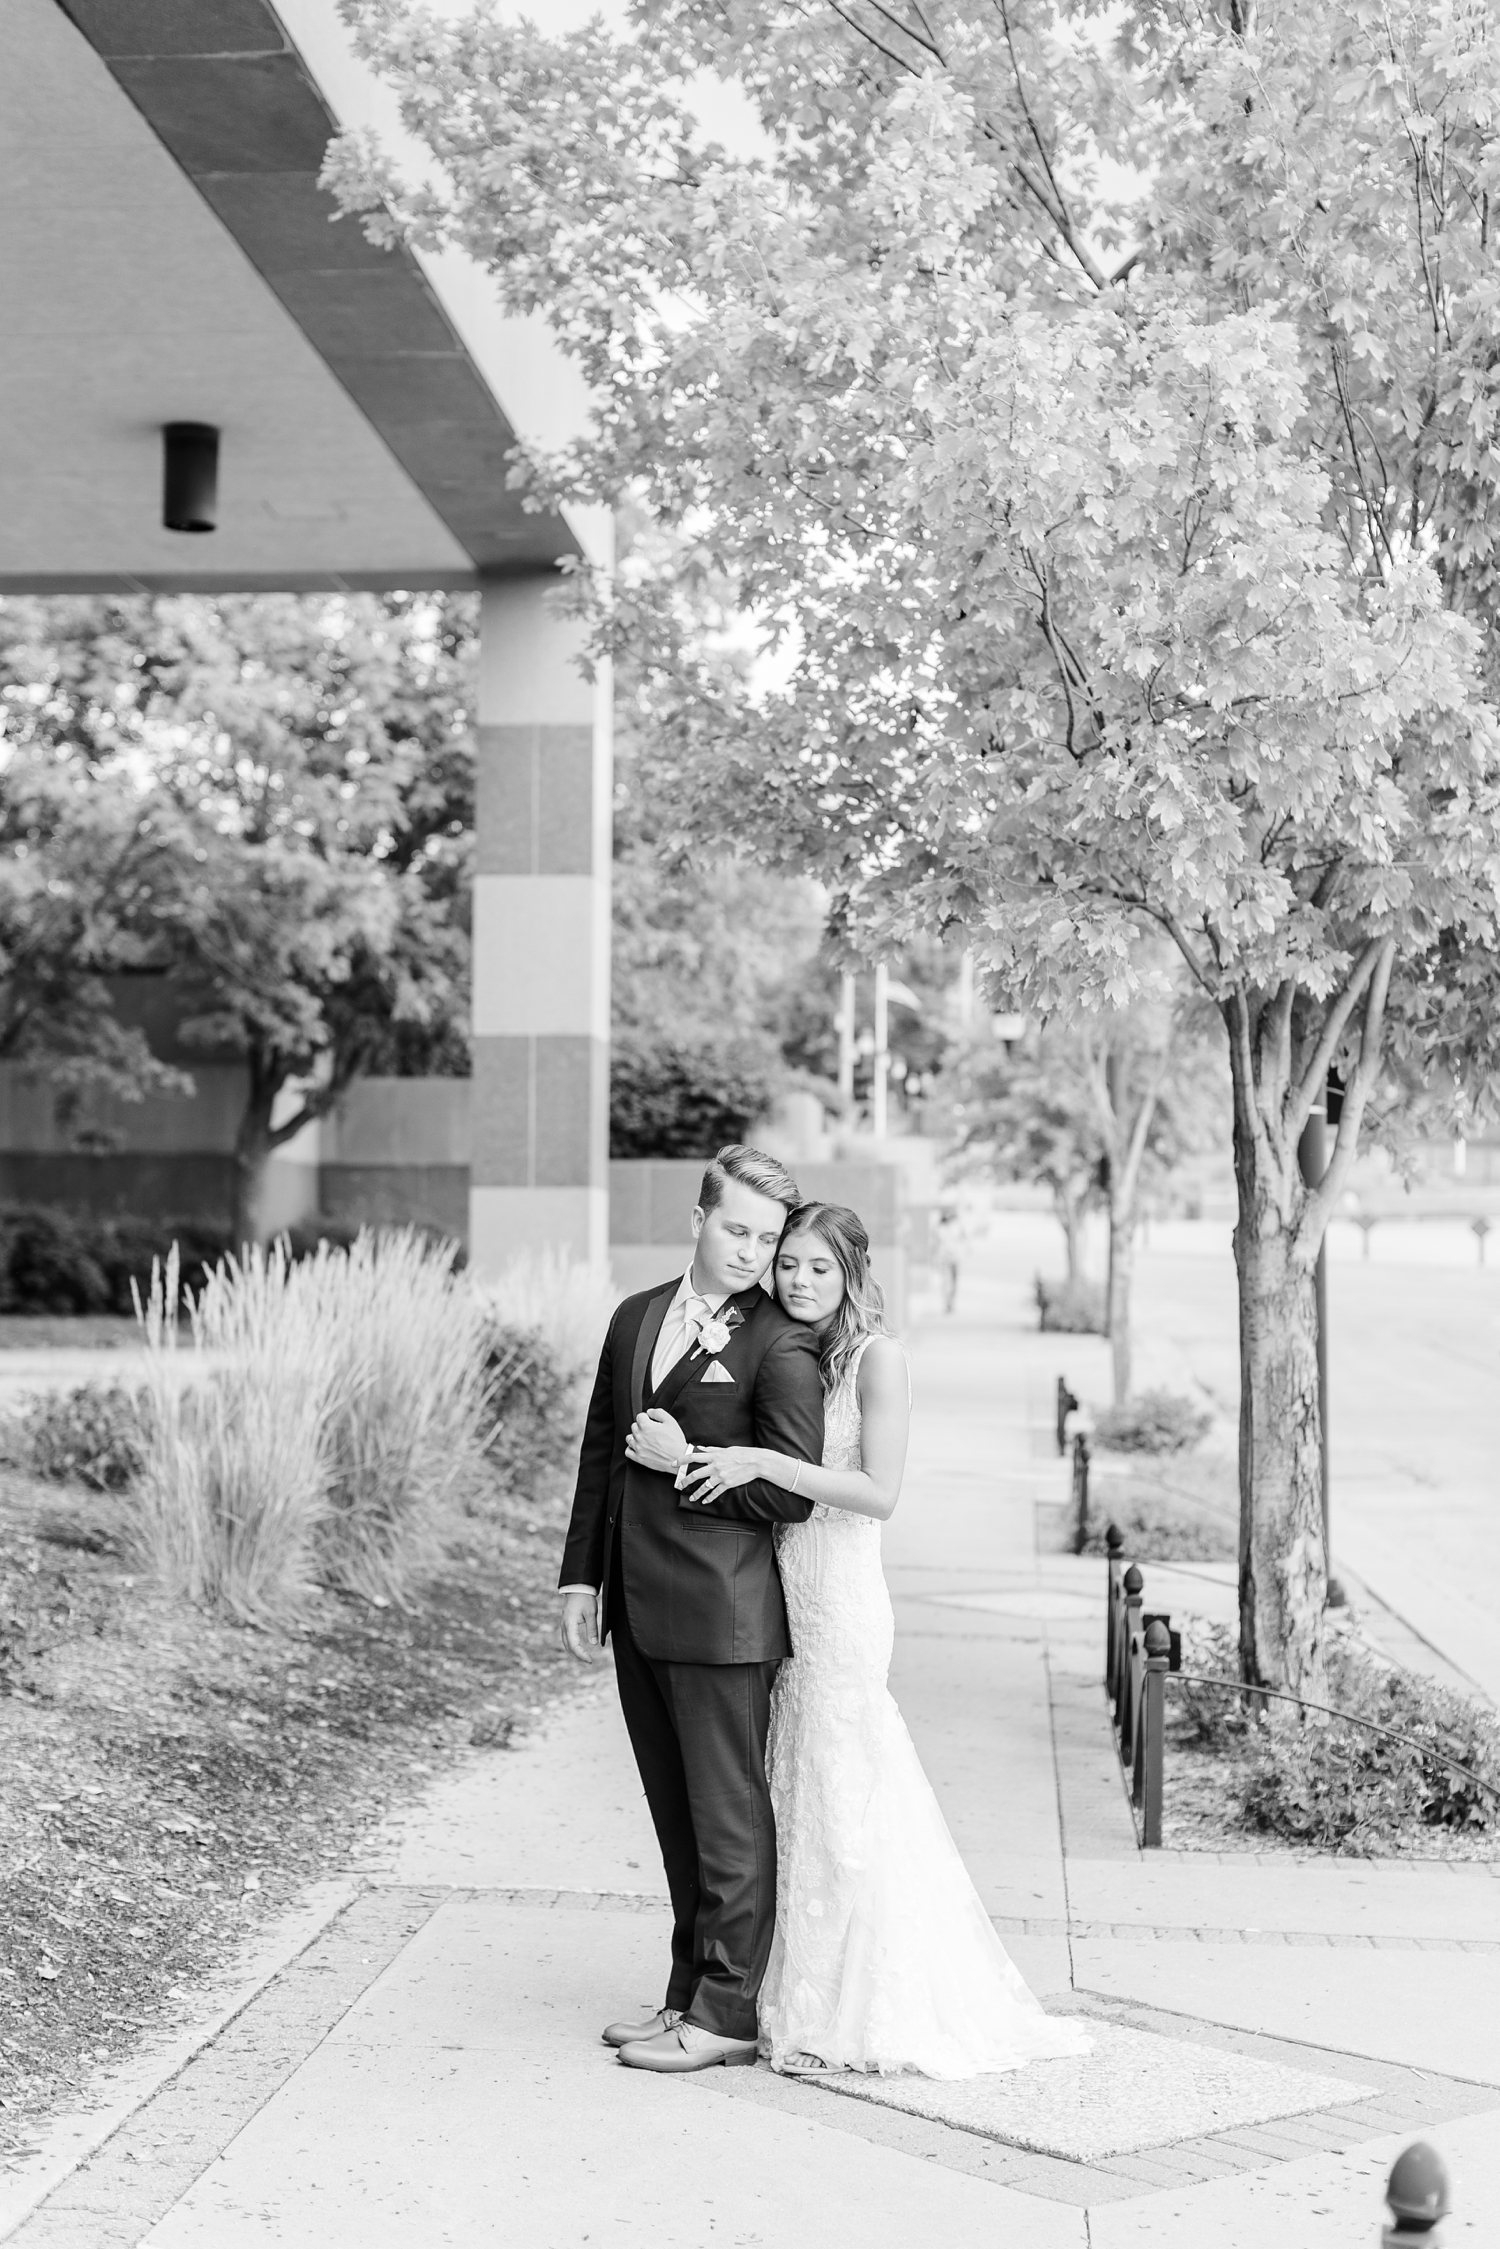 Jadi hugs her groom from behind in downtown Des Moines | CB Studio